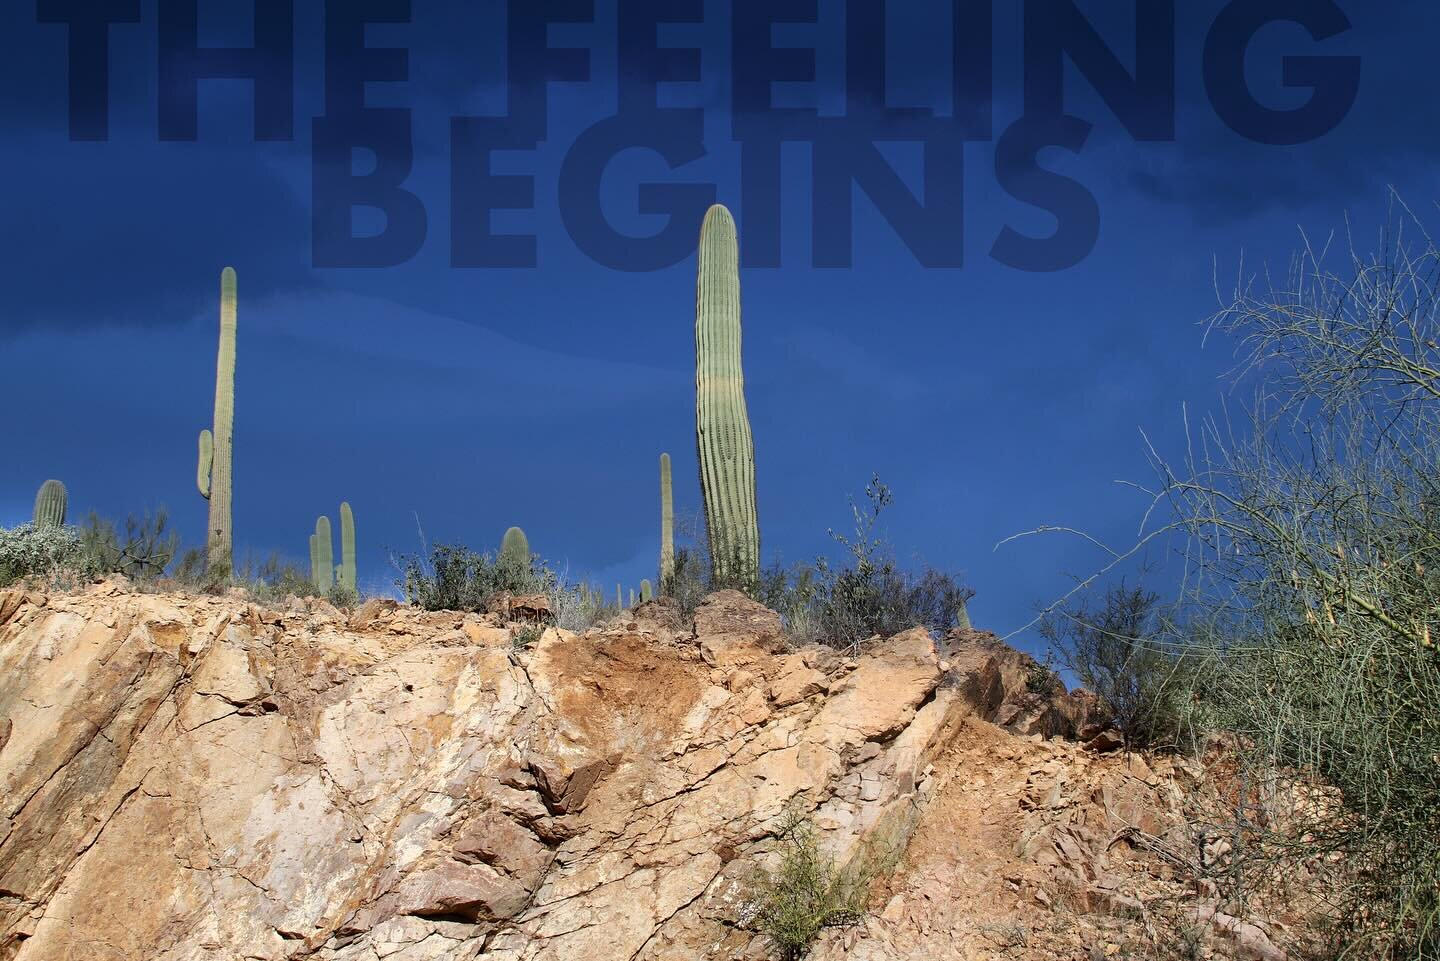 The Feeling Begins
.
🎵 Peter Gabriel, 1989
.
.
#thefeelingbegins #petergabriel #songtitles #sedona #arizona #cactus #nature #beauty